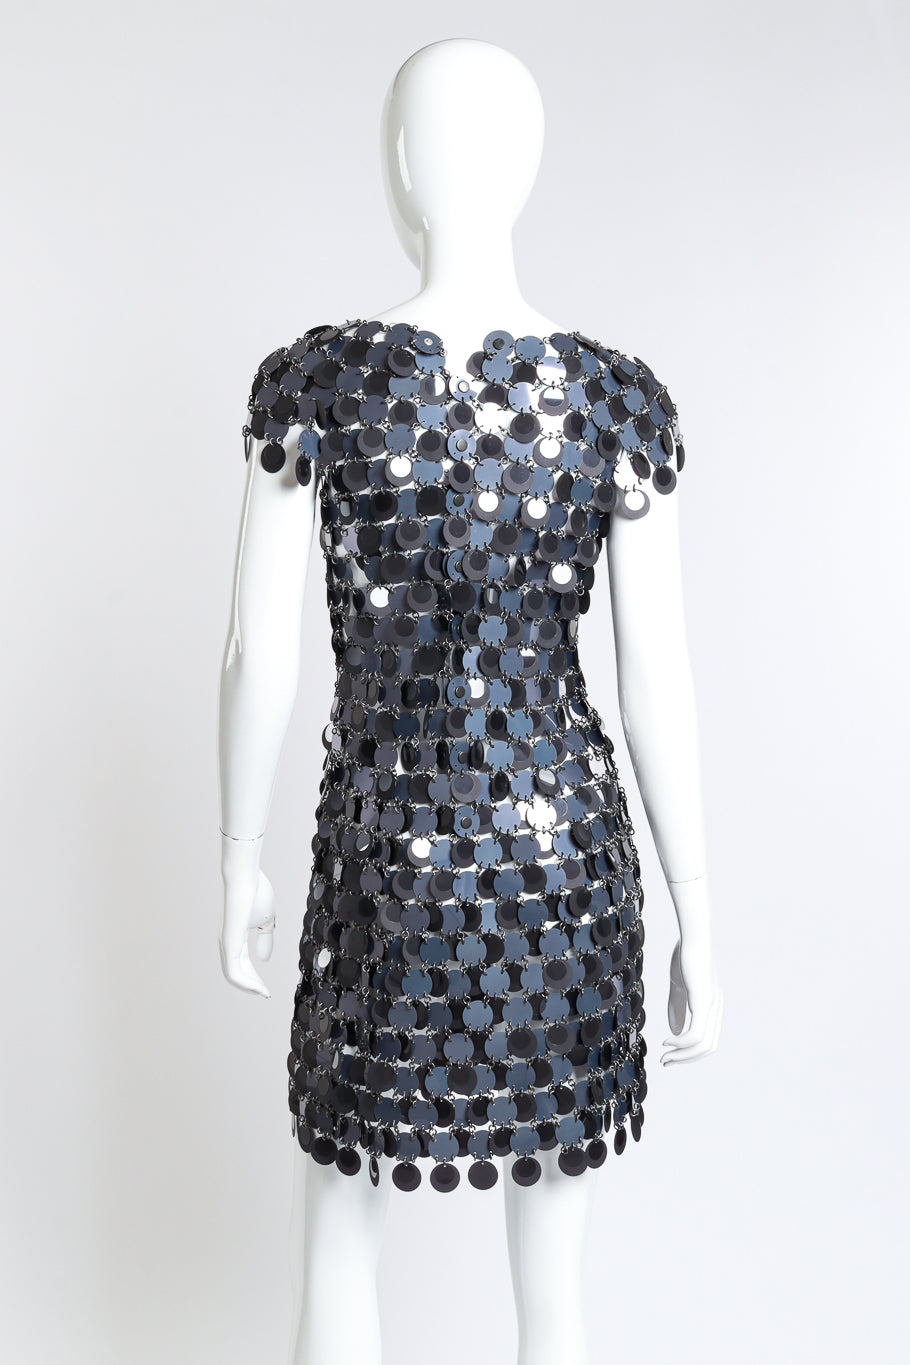 Paco Rabanne Disc Chain Mini Dress back on mannequin @recess la